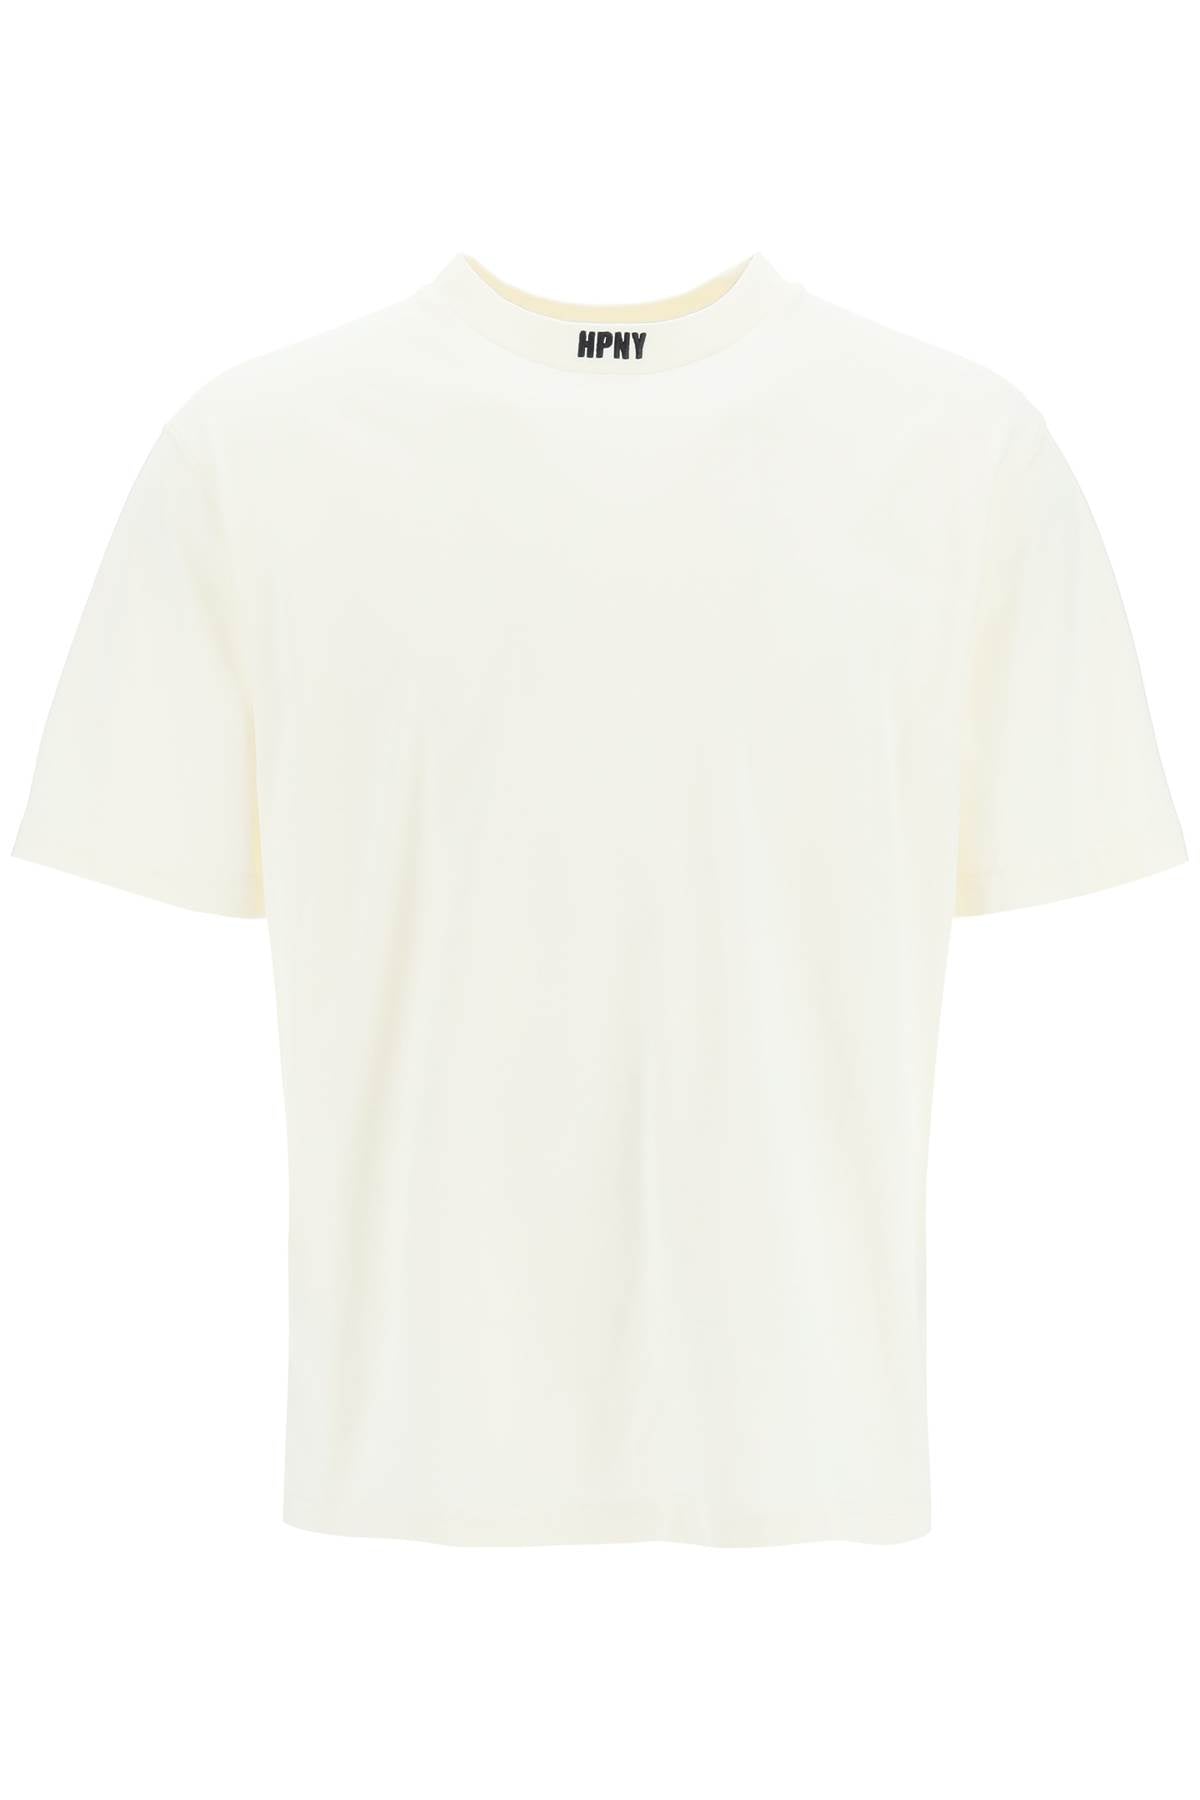 Heron preston hpny embroidered t-shirt HMAA034C99JER002 WHITE BLACK